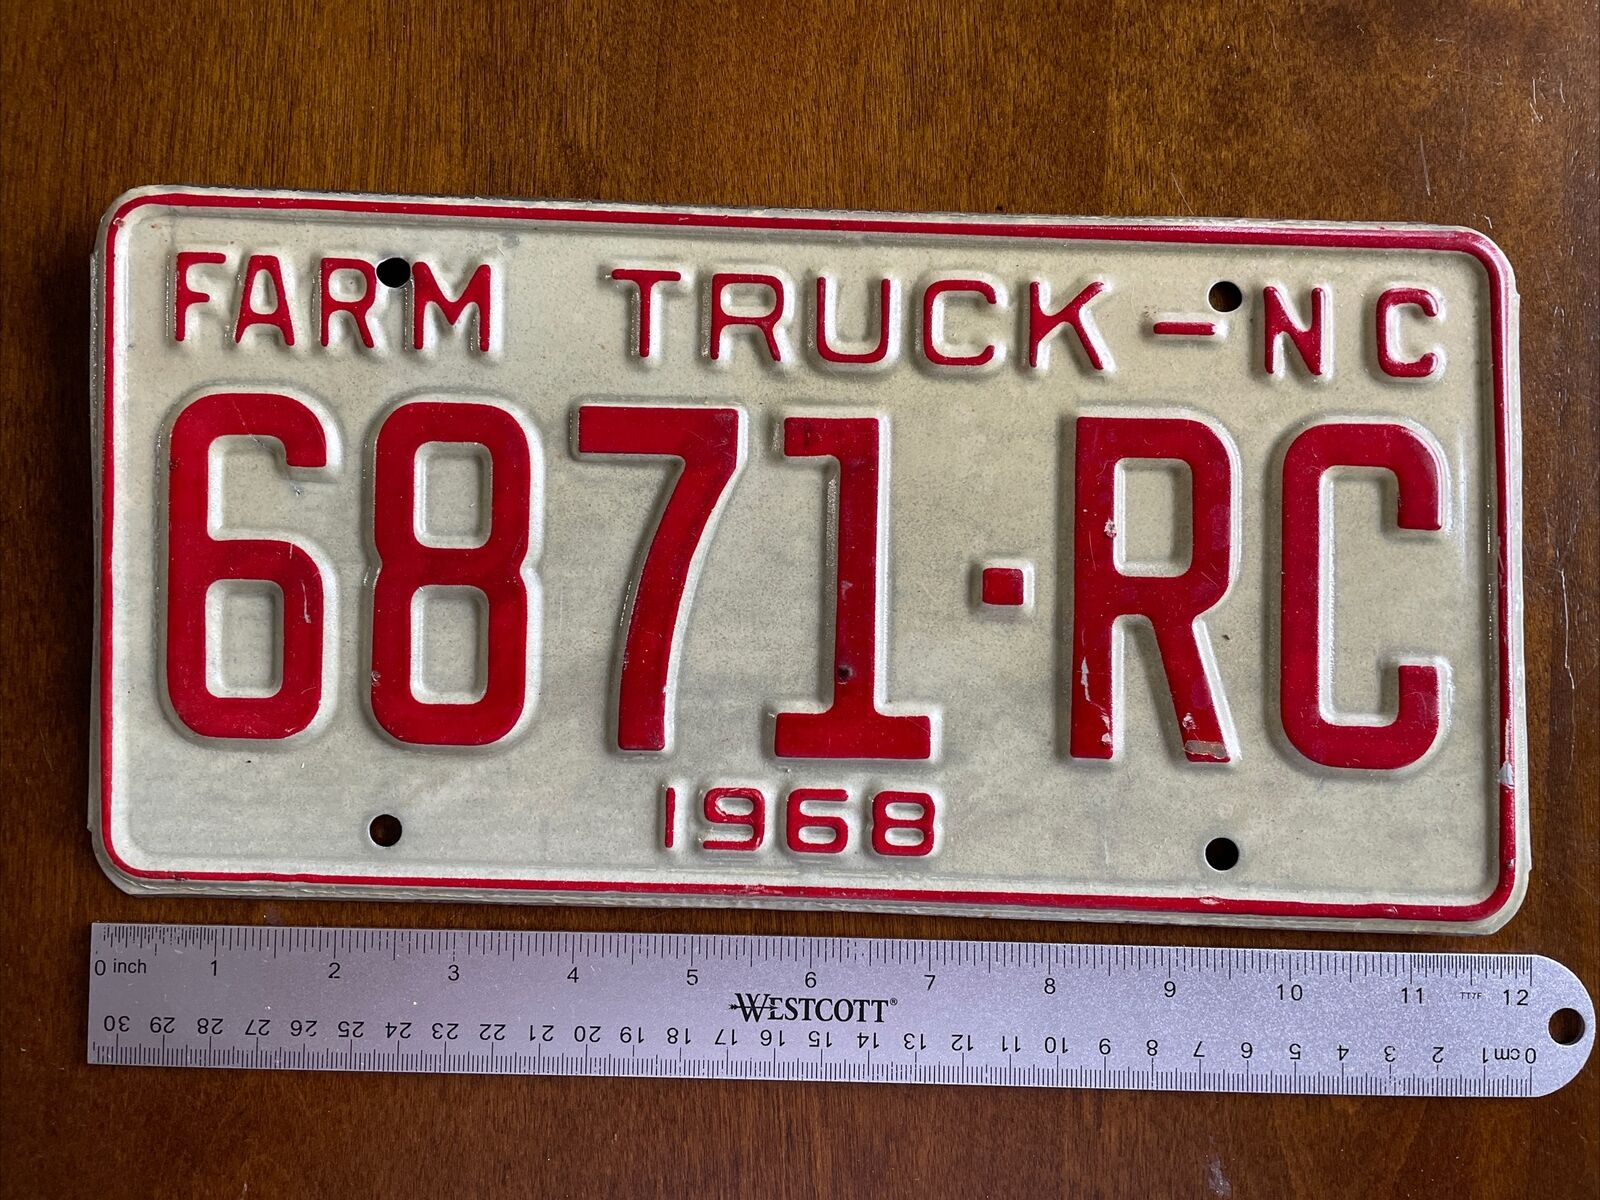 Vintage 1968 North Carolina Farm Truck License Plate Tag 6871-RC